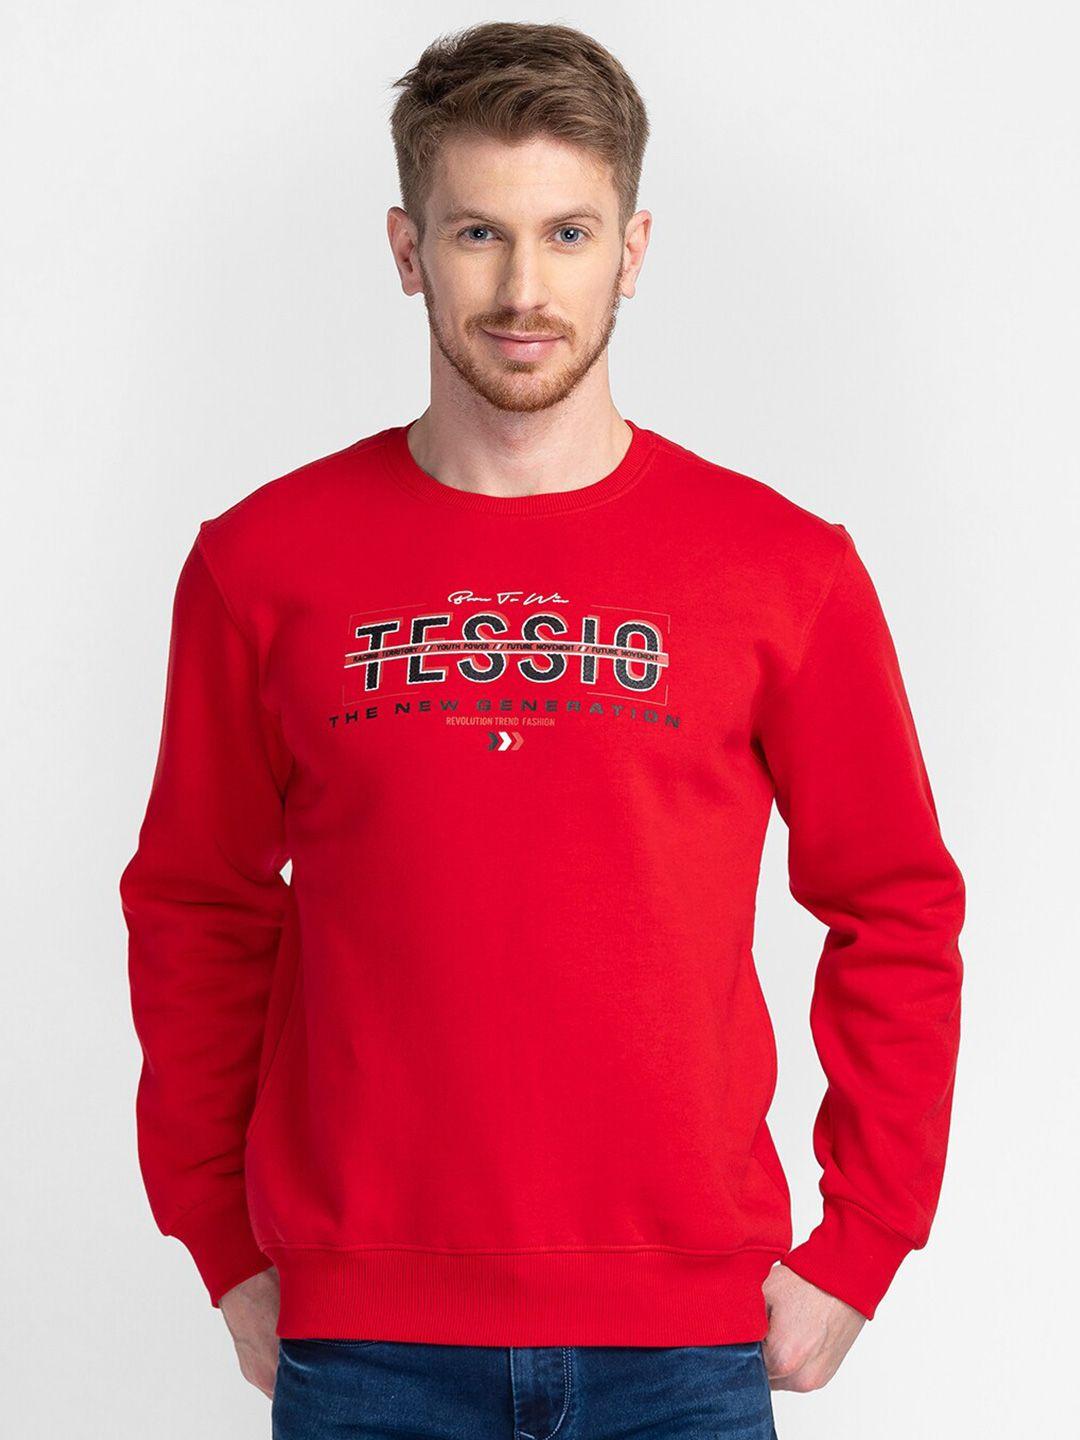 tessio men red printed sweatshirt